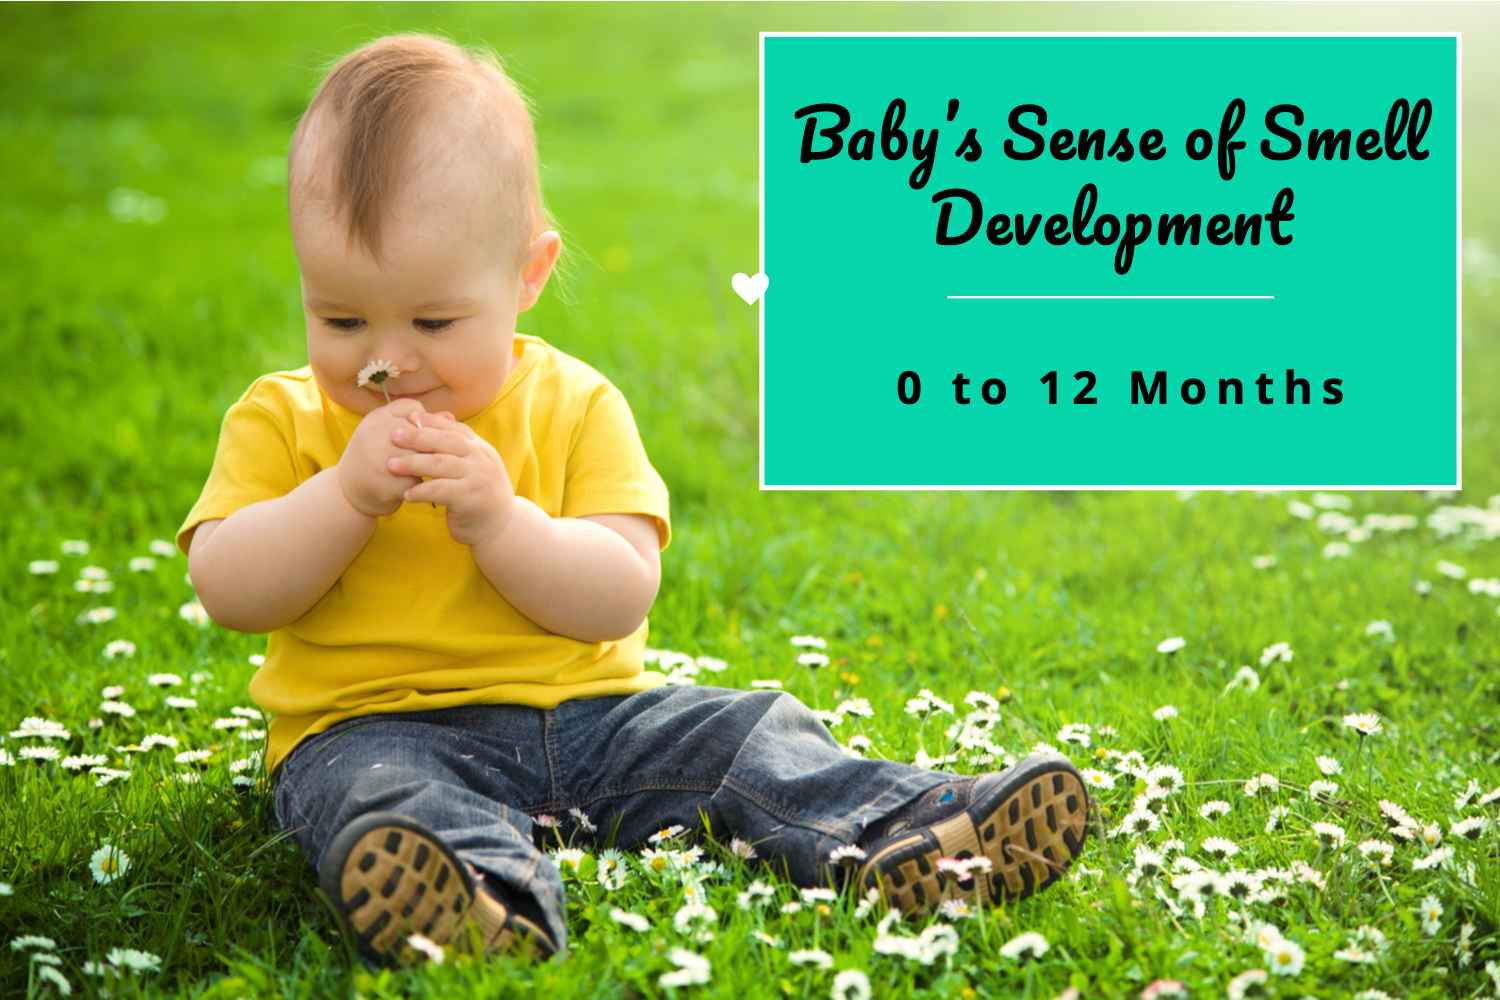 Baby’s Sense of Smell Development